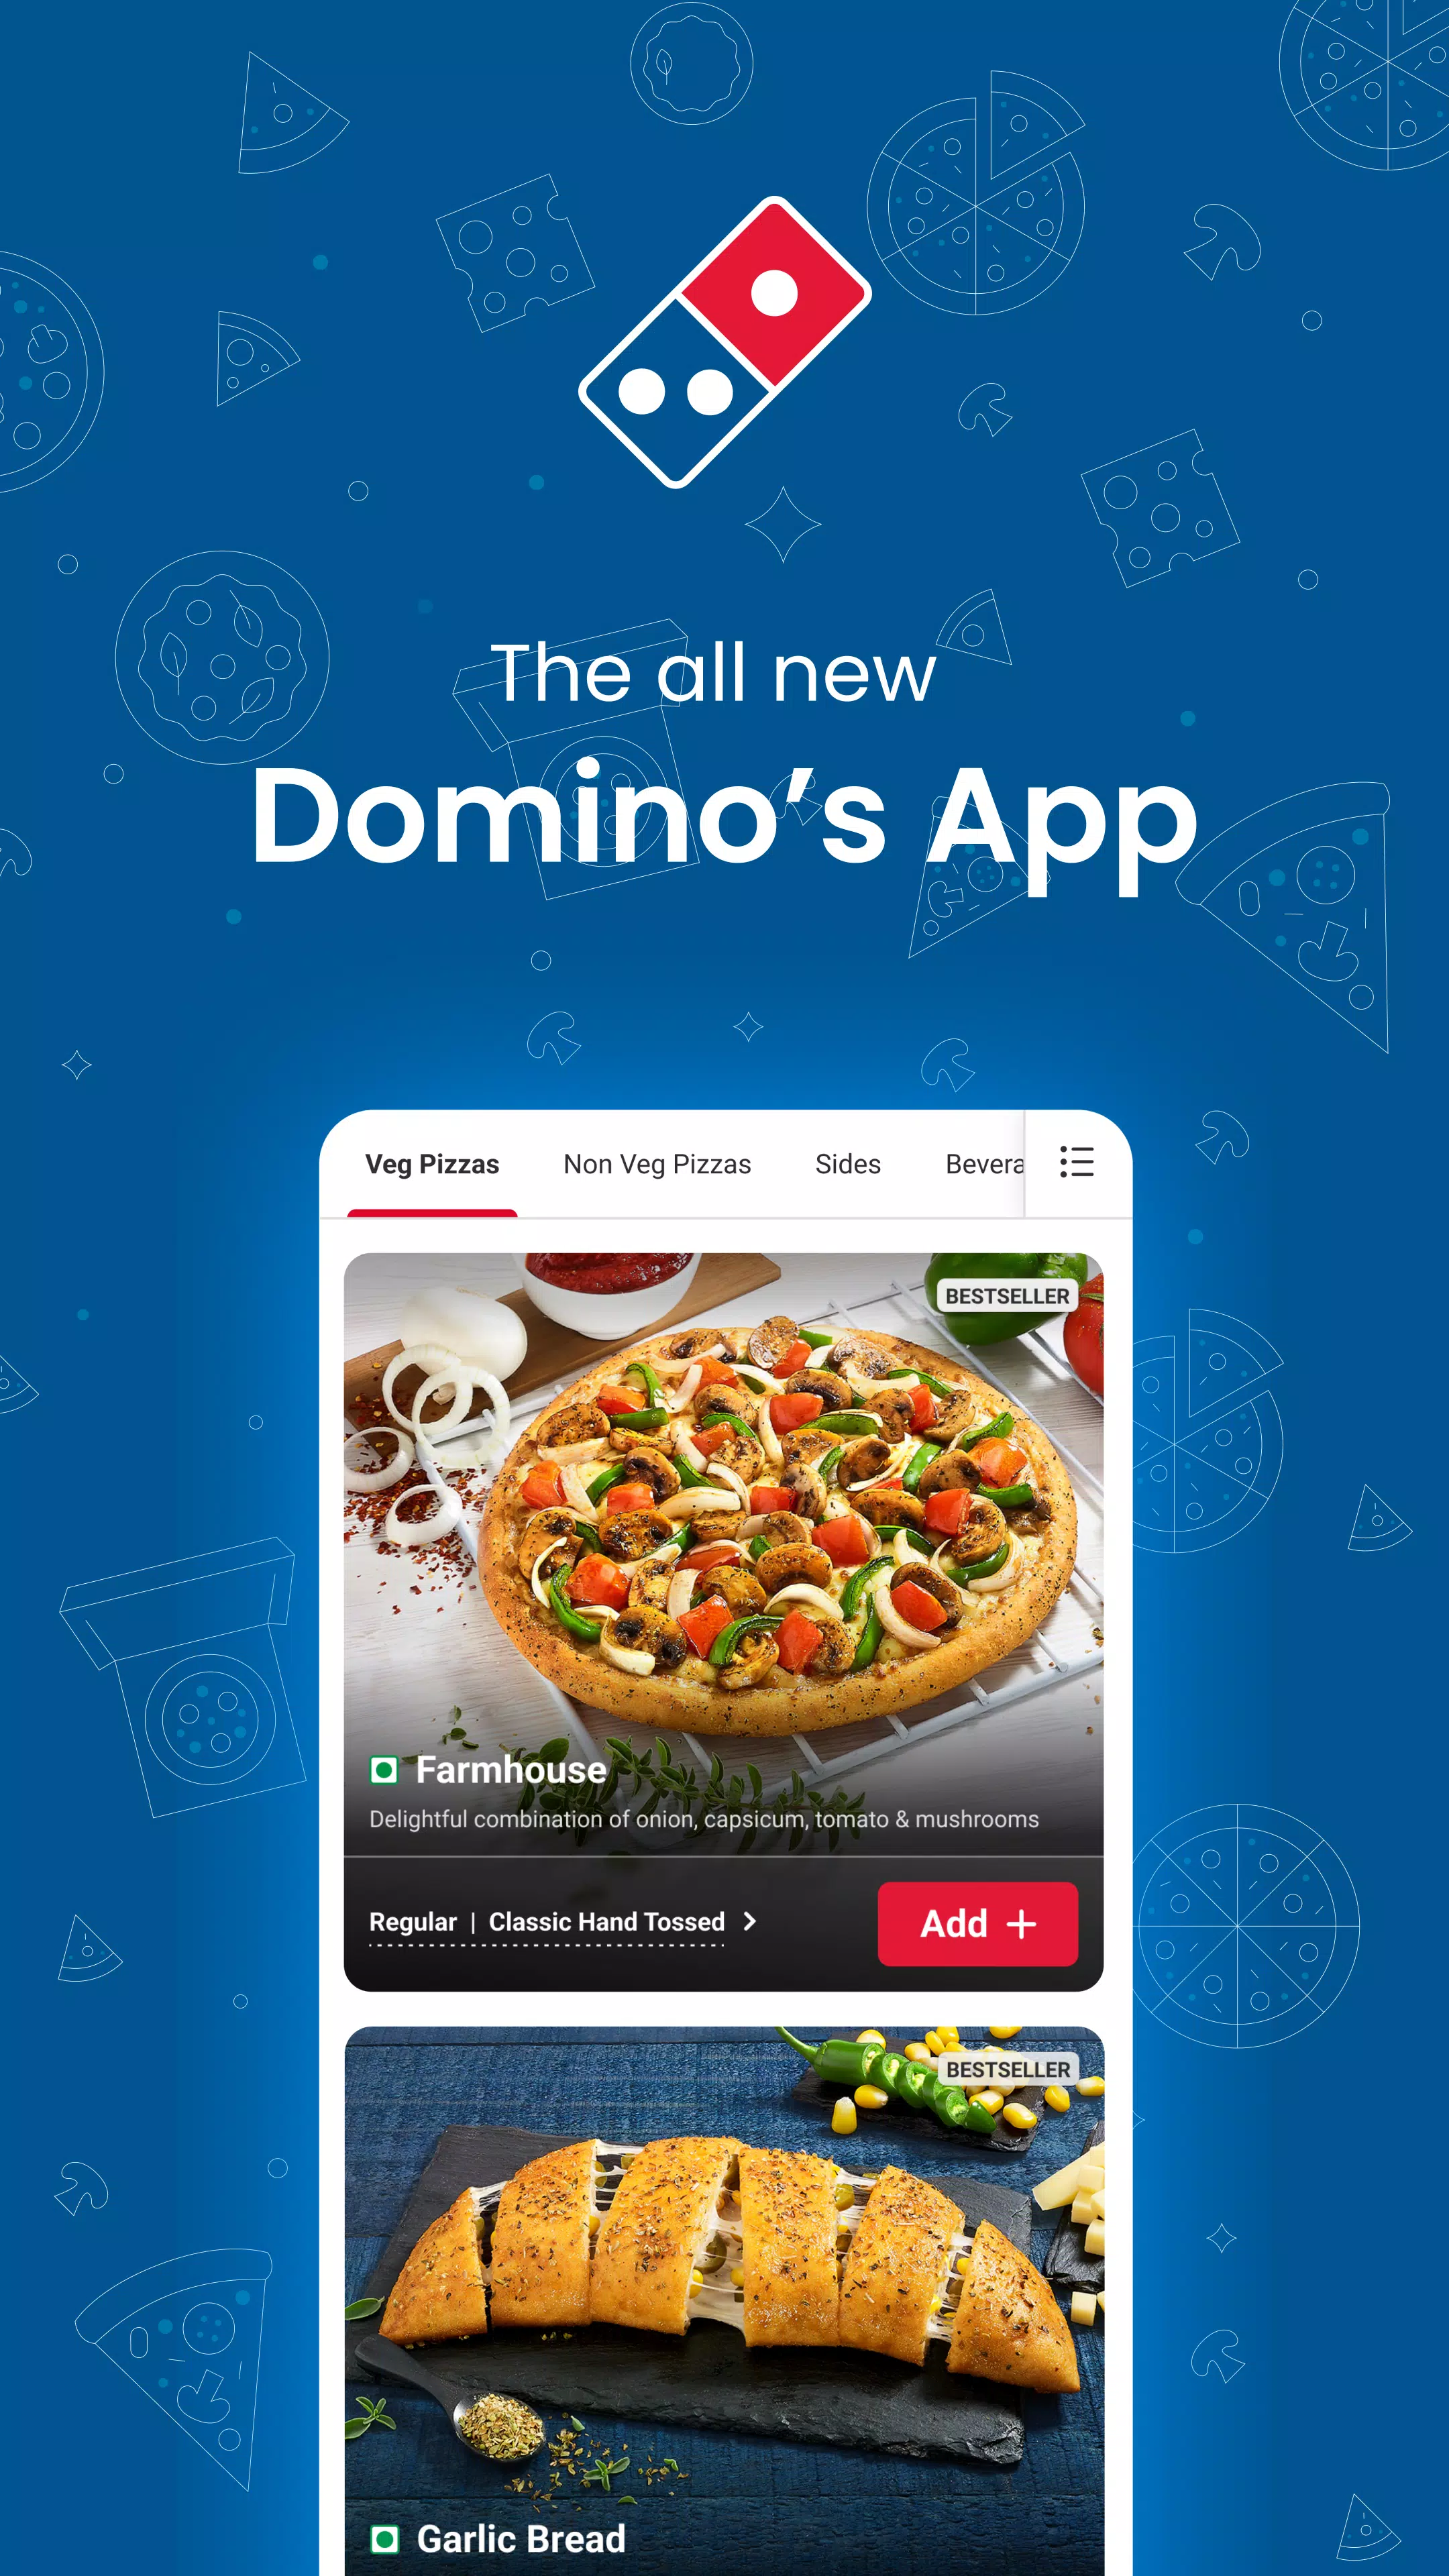 Pizza Delivery para Windows - Baixe gratuitamente na Uptodown